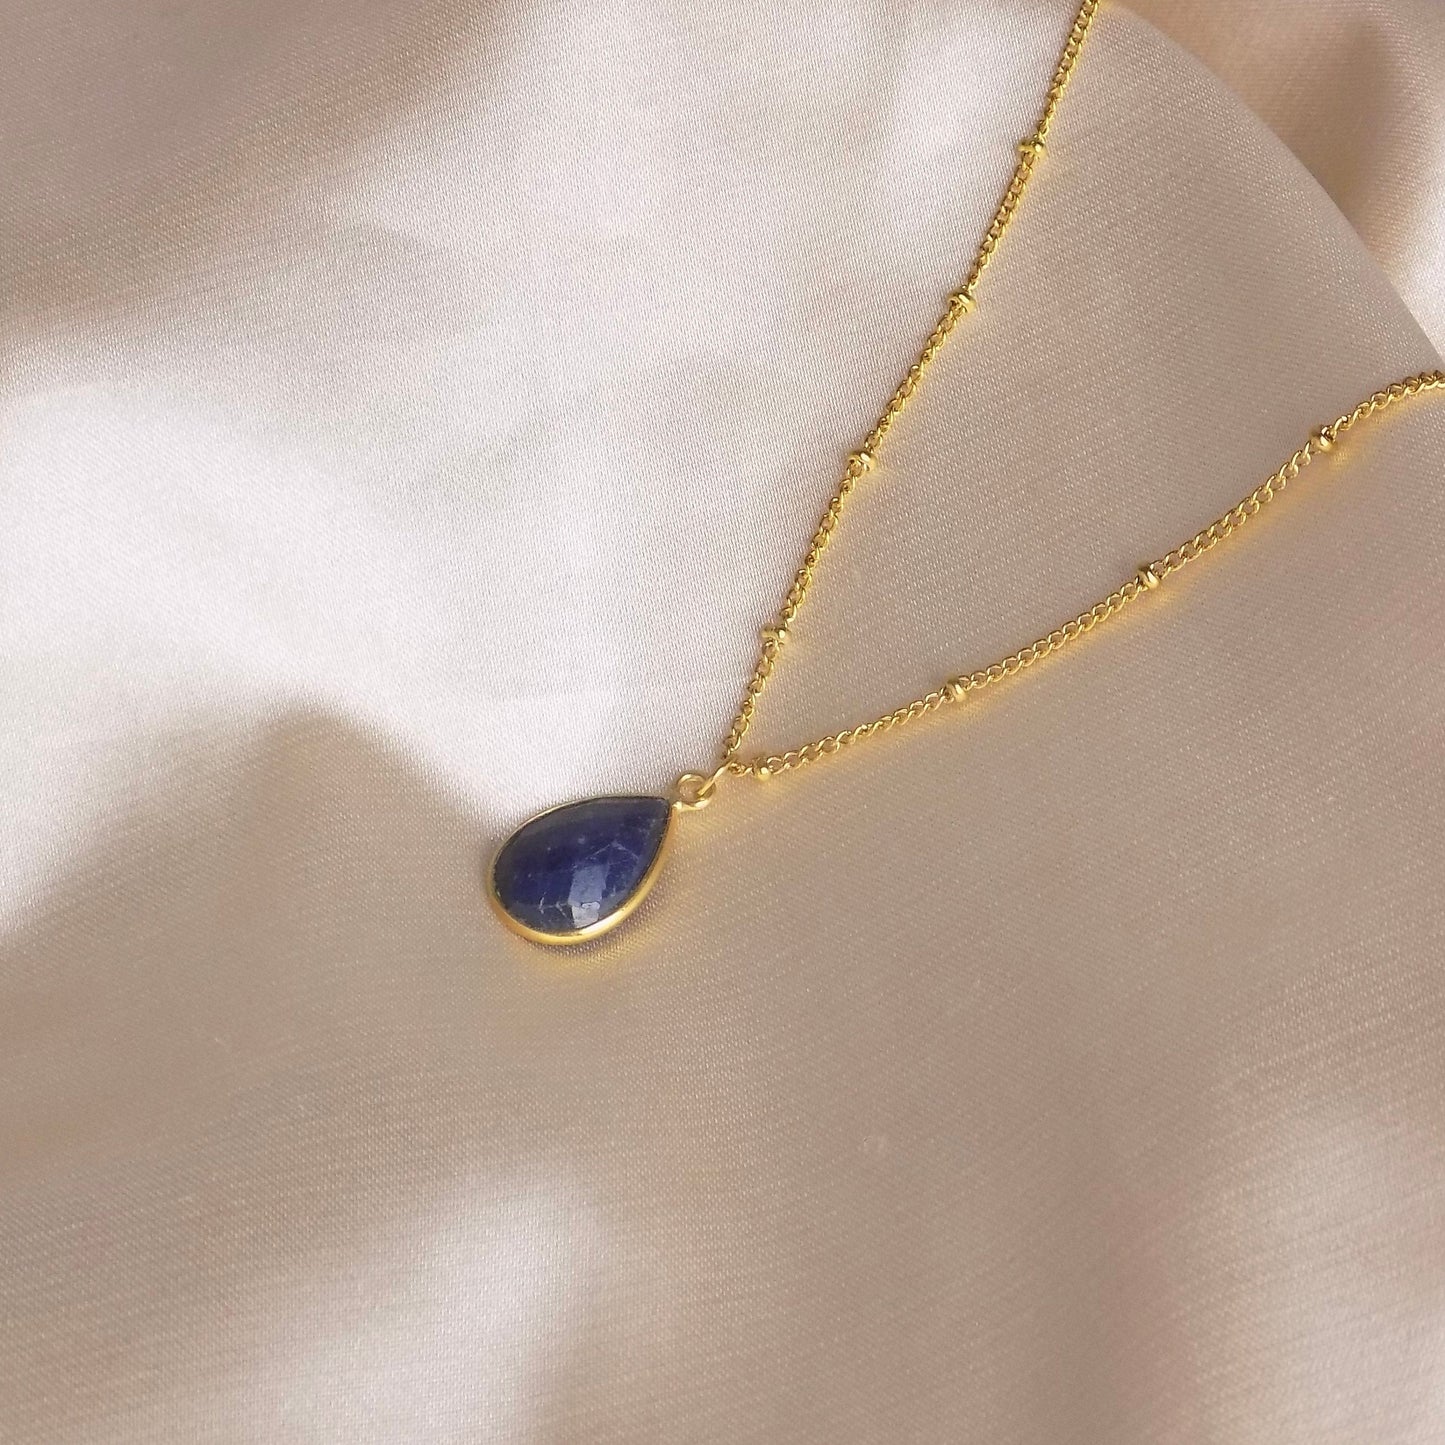 Blue Sapphire Necklace Satellite Chain 18K Gold Stainless Steel, September Birthstone, M7-72